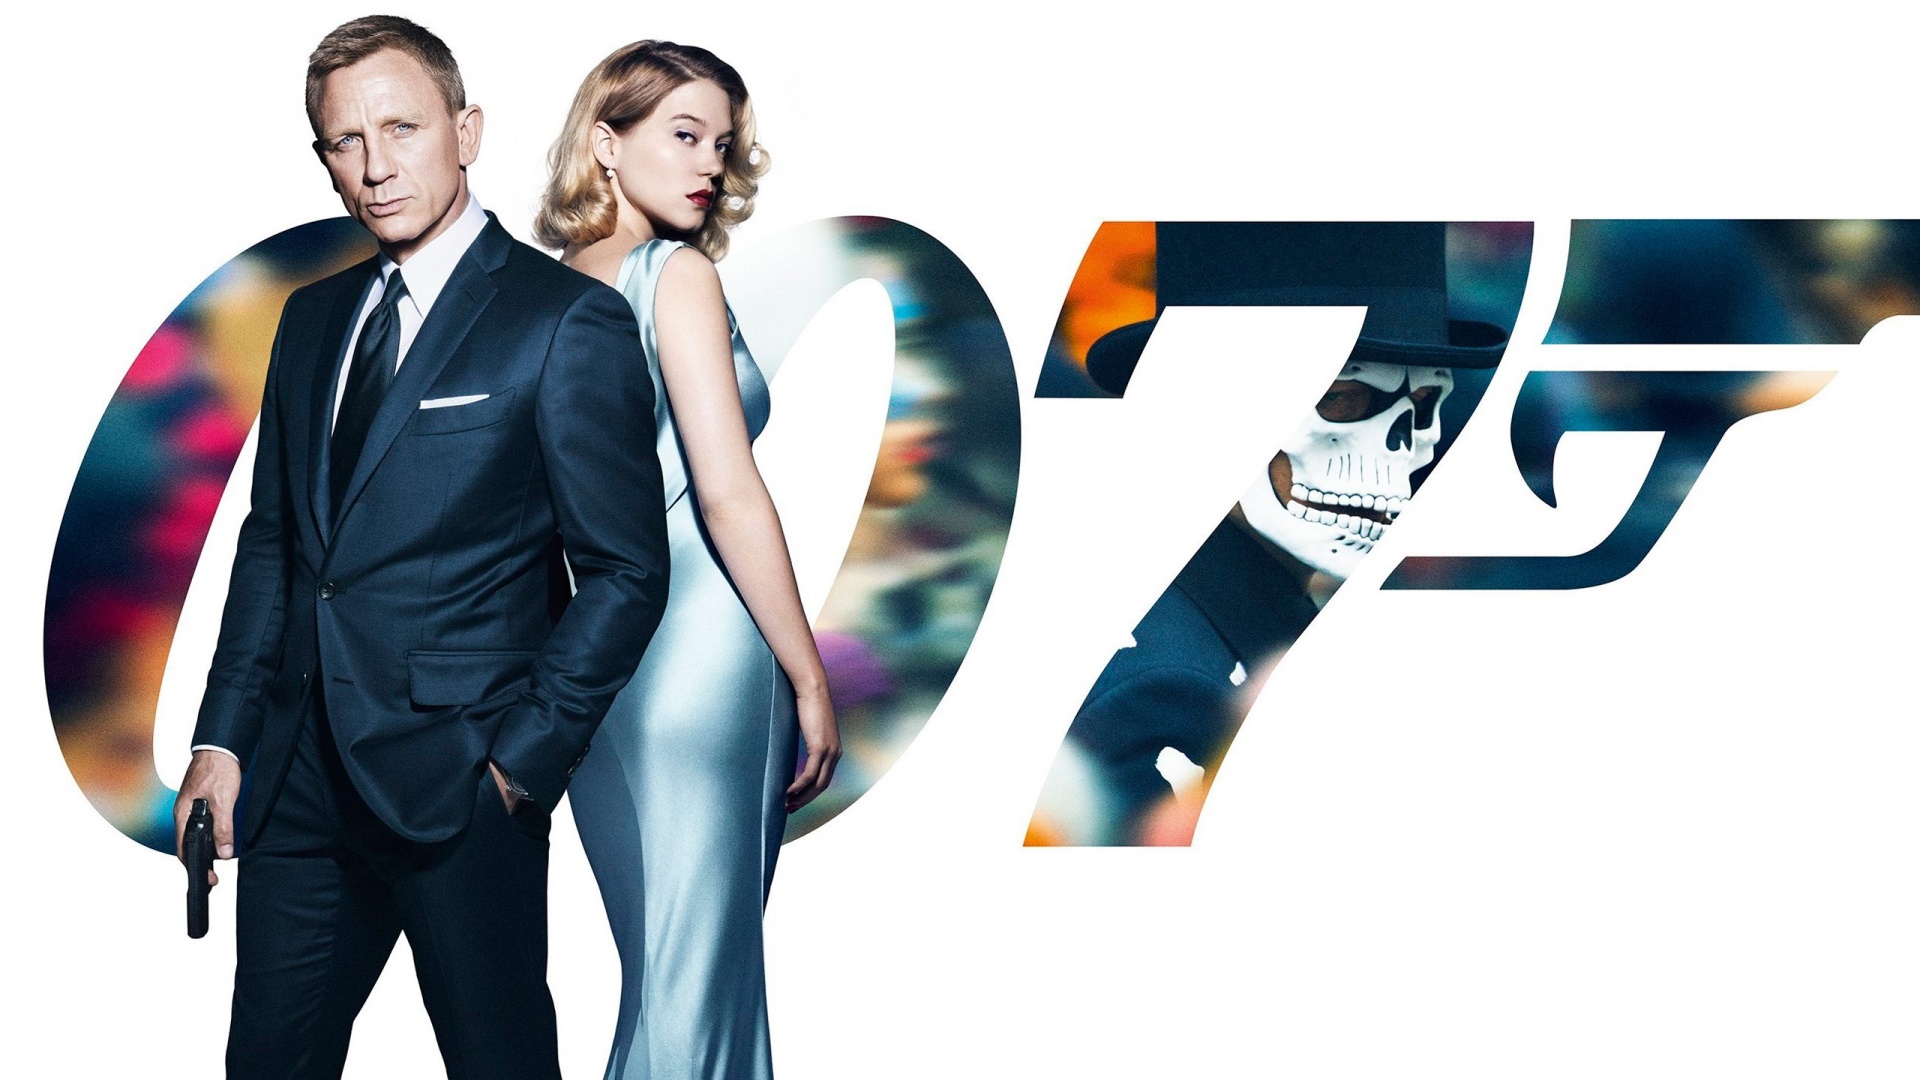 James Bond Spectre Wallpaper For Your